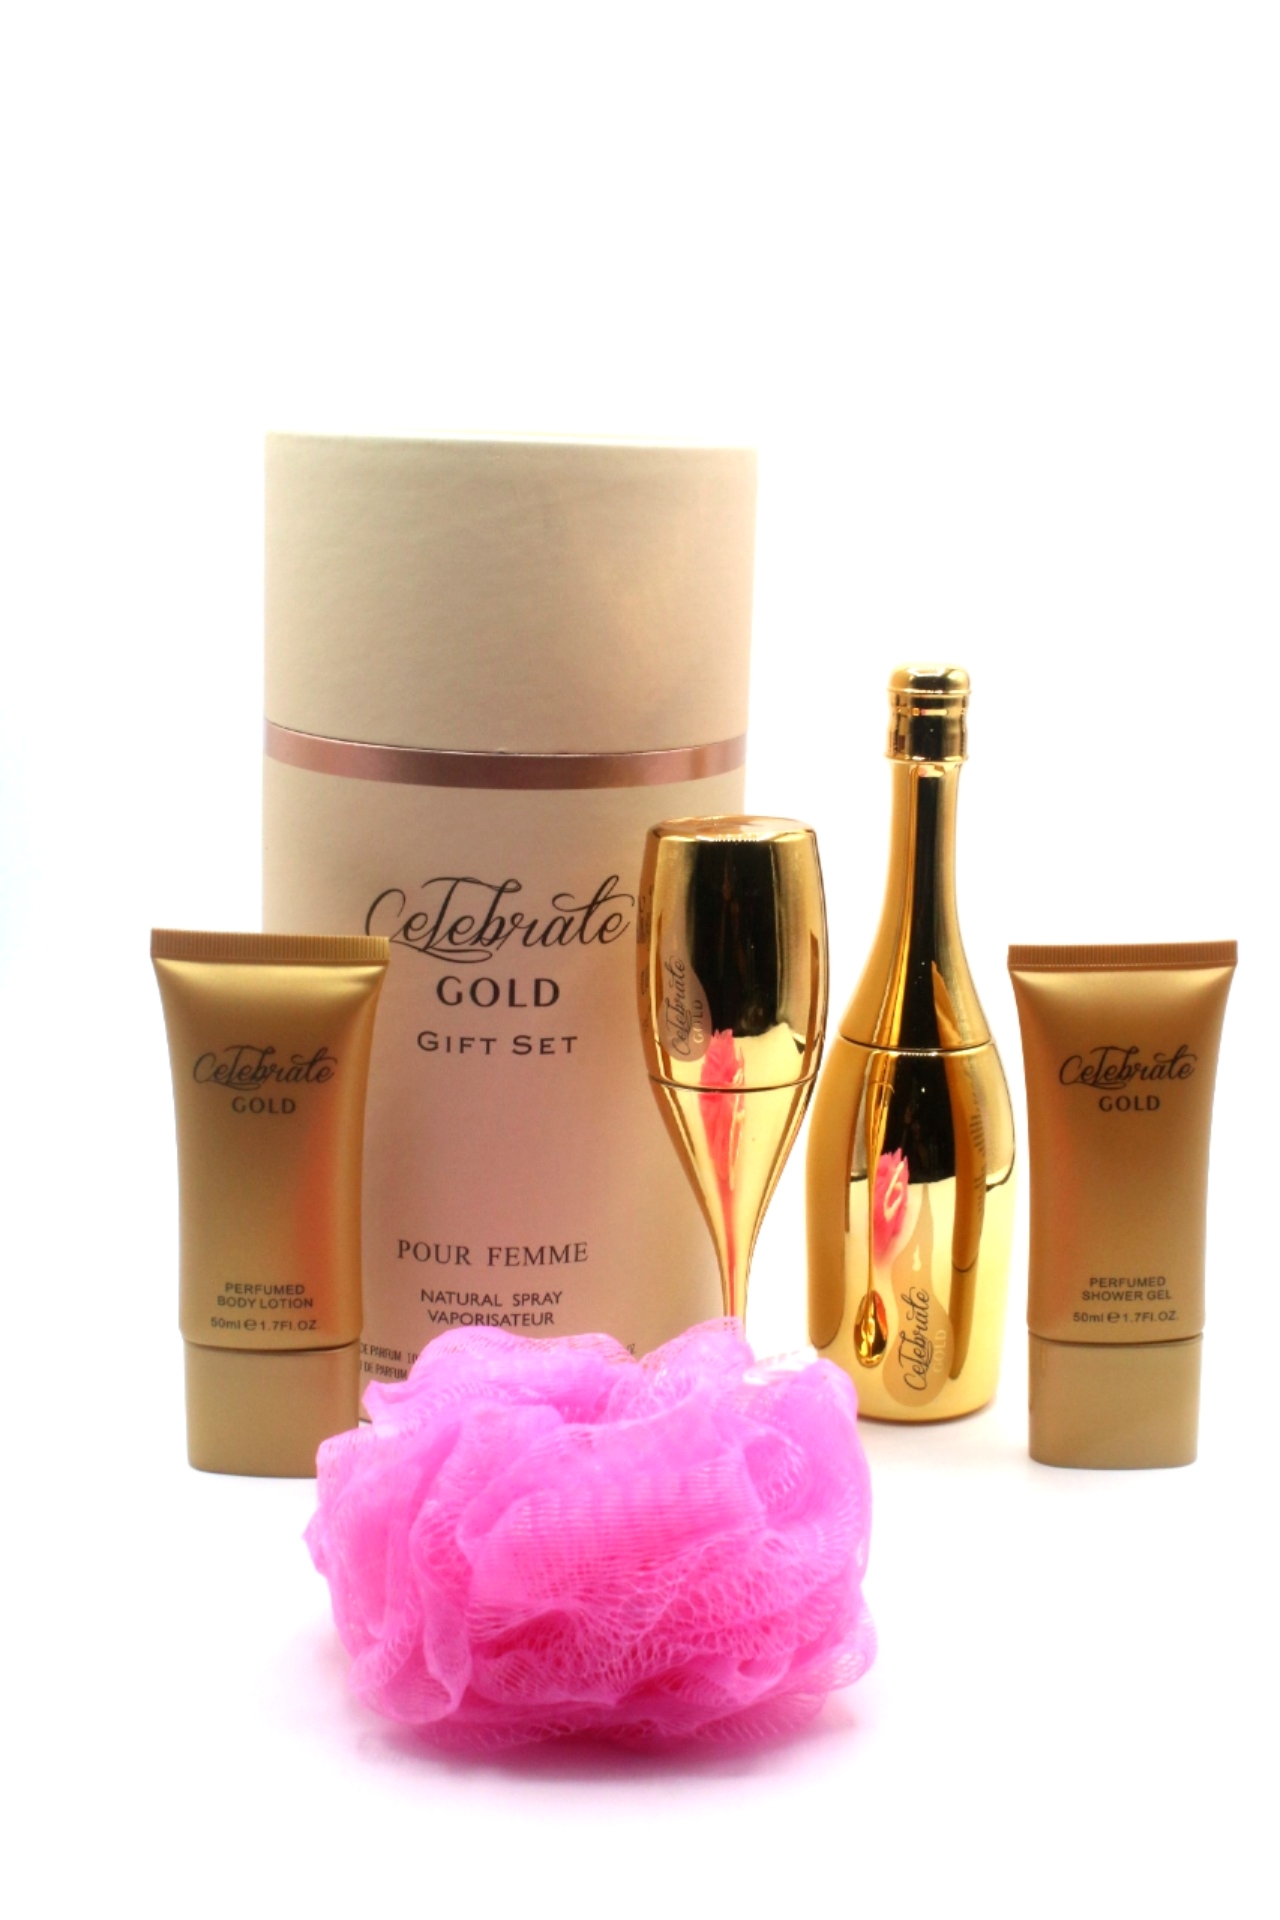 Celebrate Gold Gift Set Pour Femme Perfume